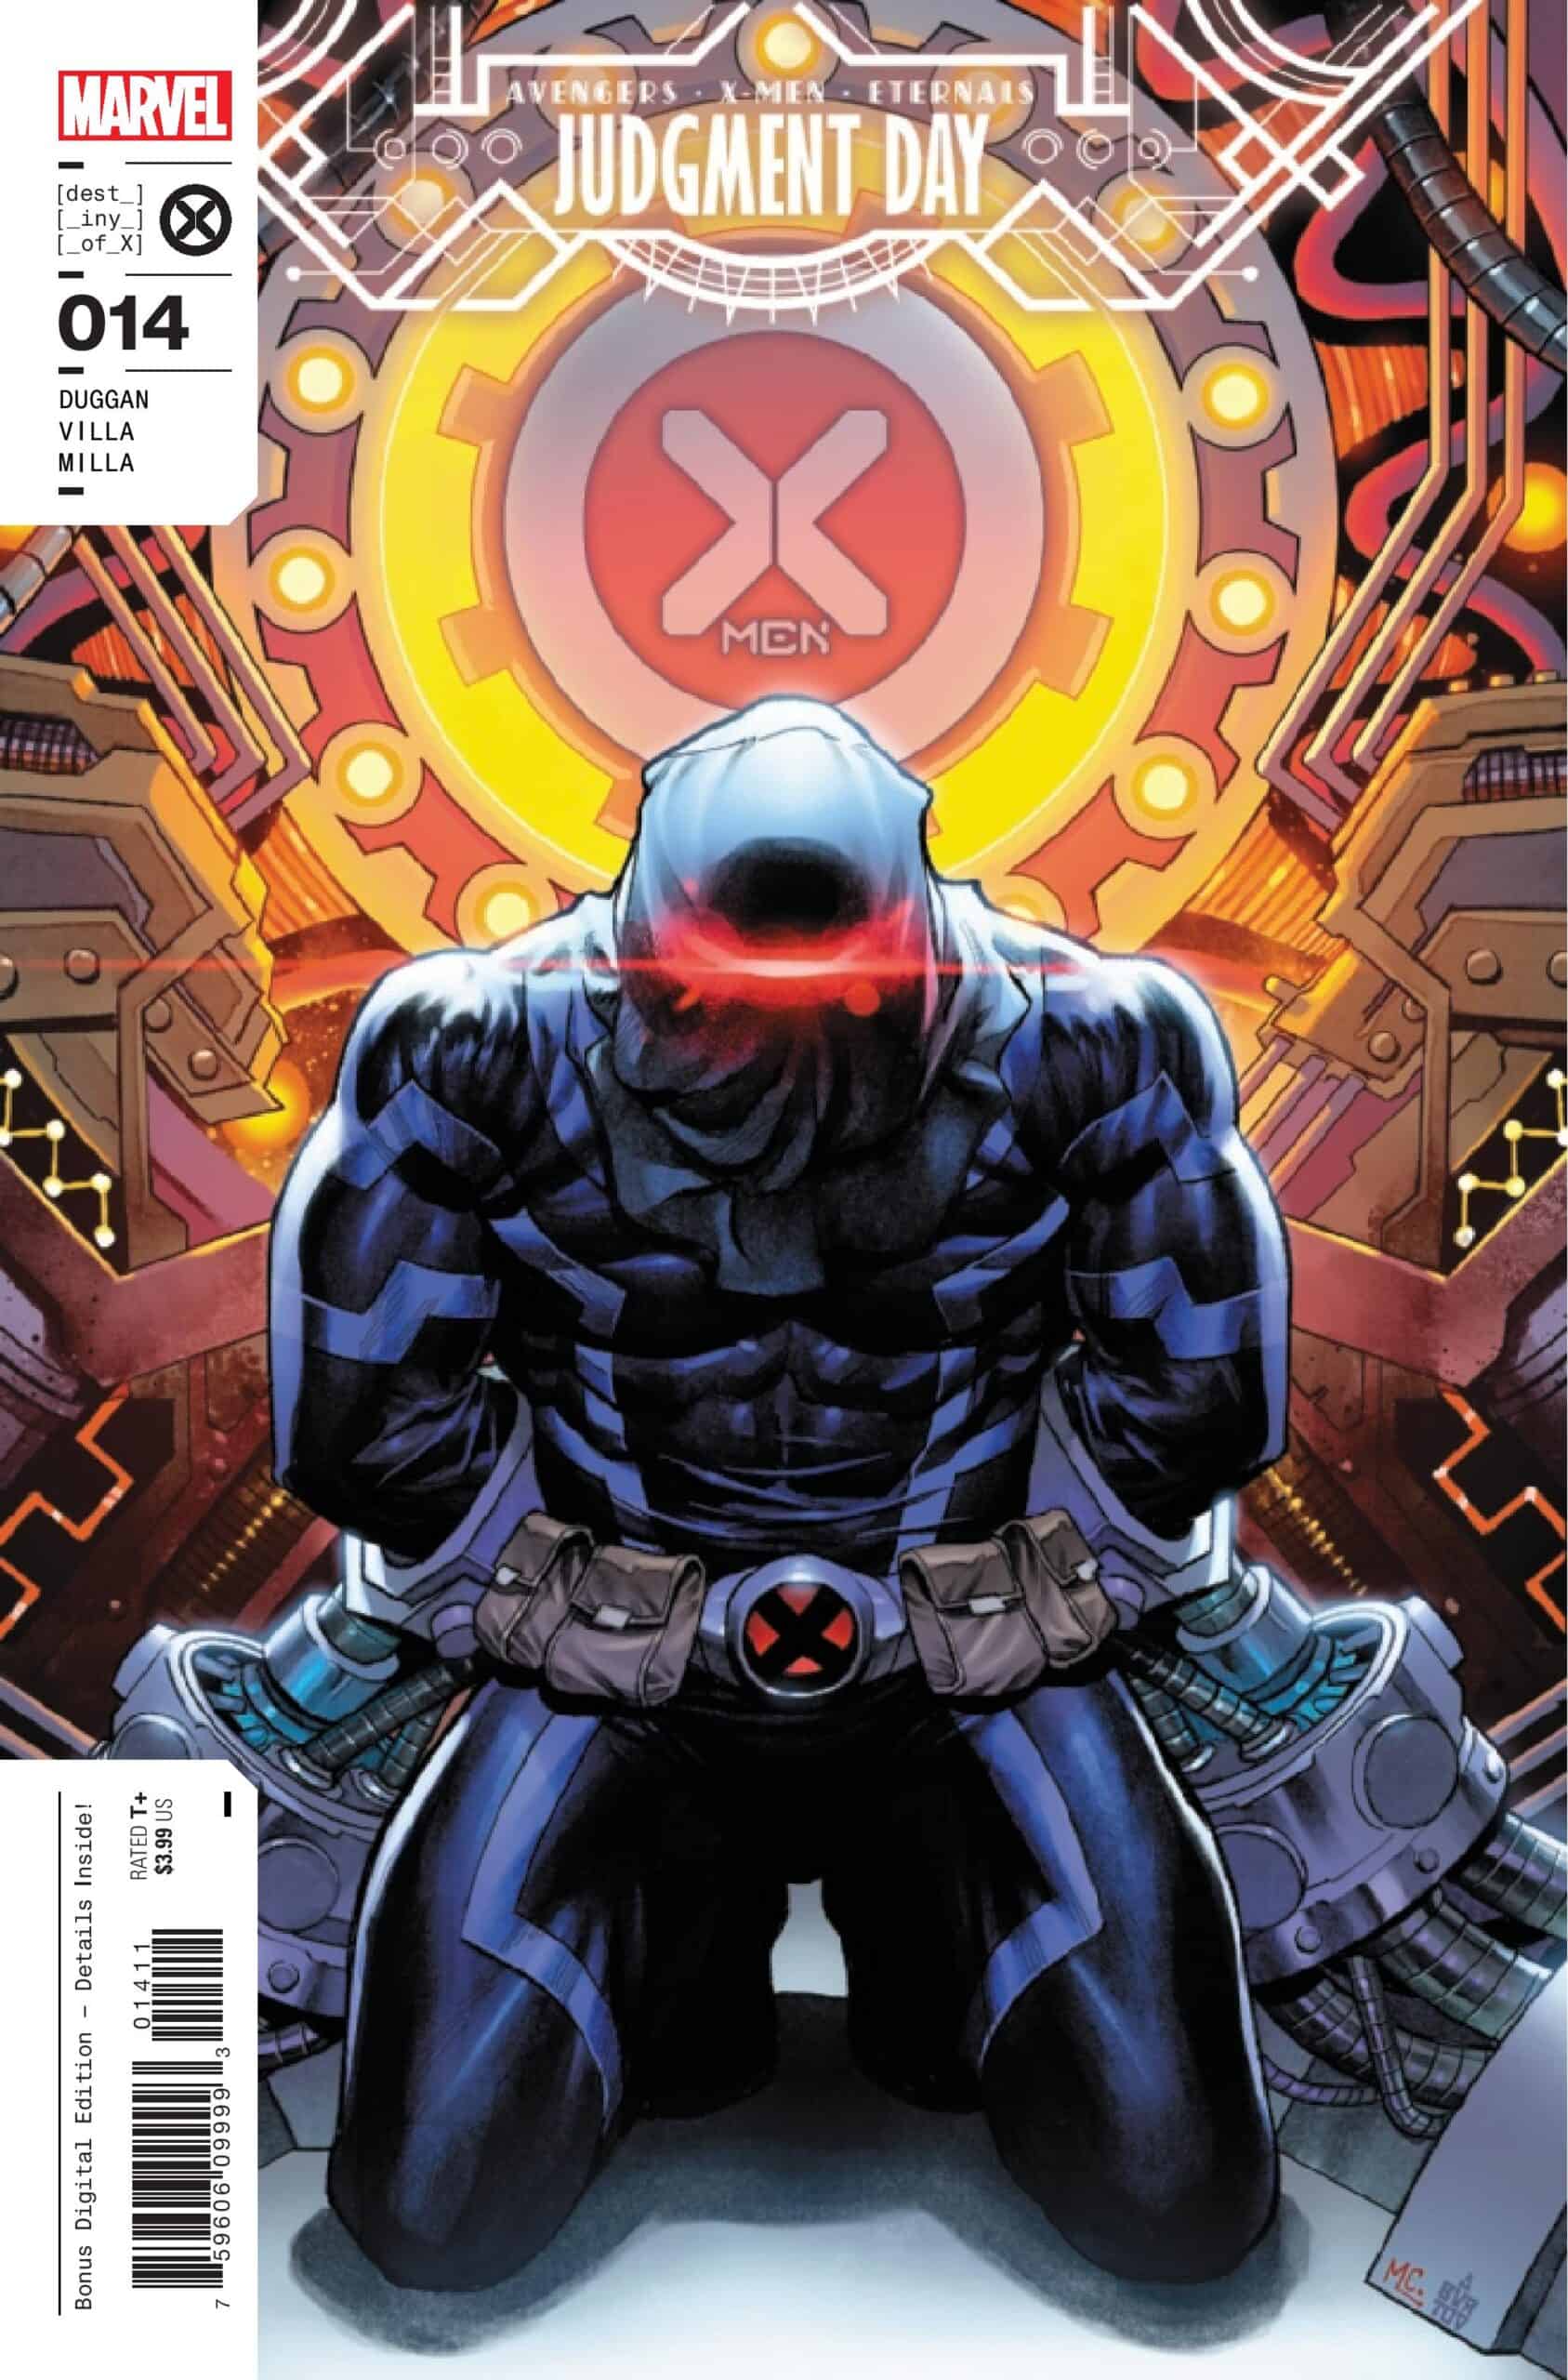 Astonishing X-Men #7: CGC 9.0- 1st App Blindfold & Death of Wing (Marvel  Comics)